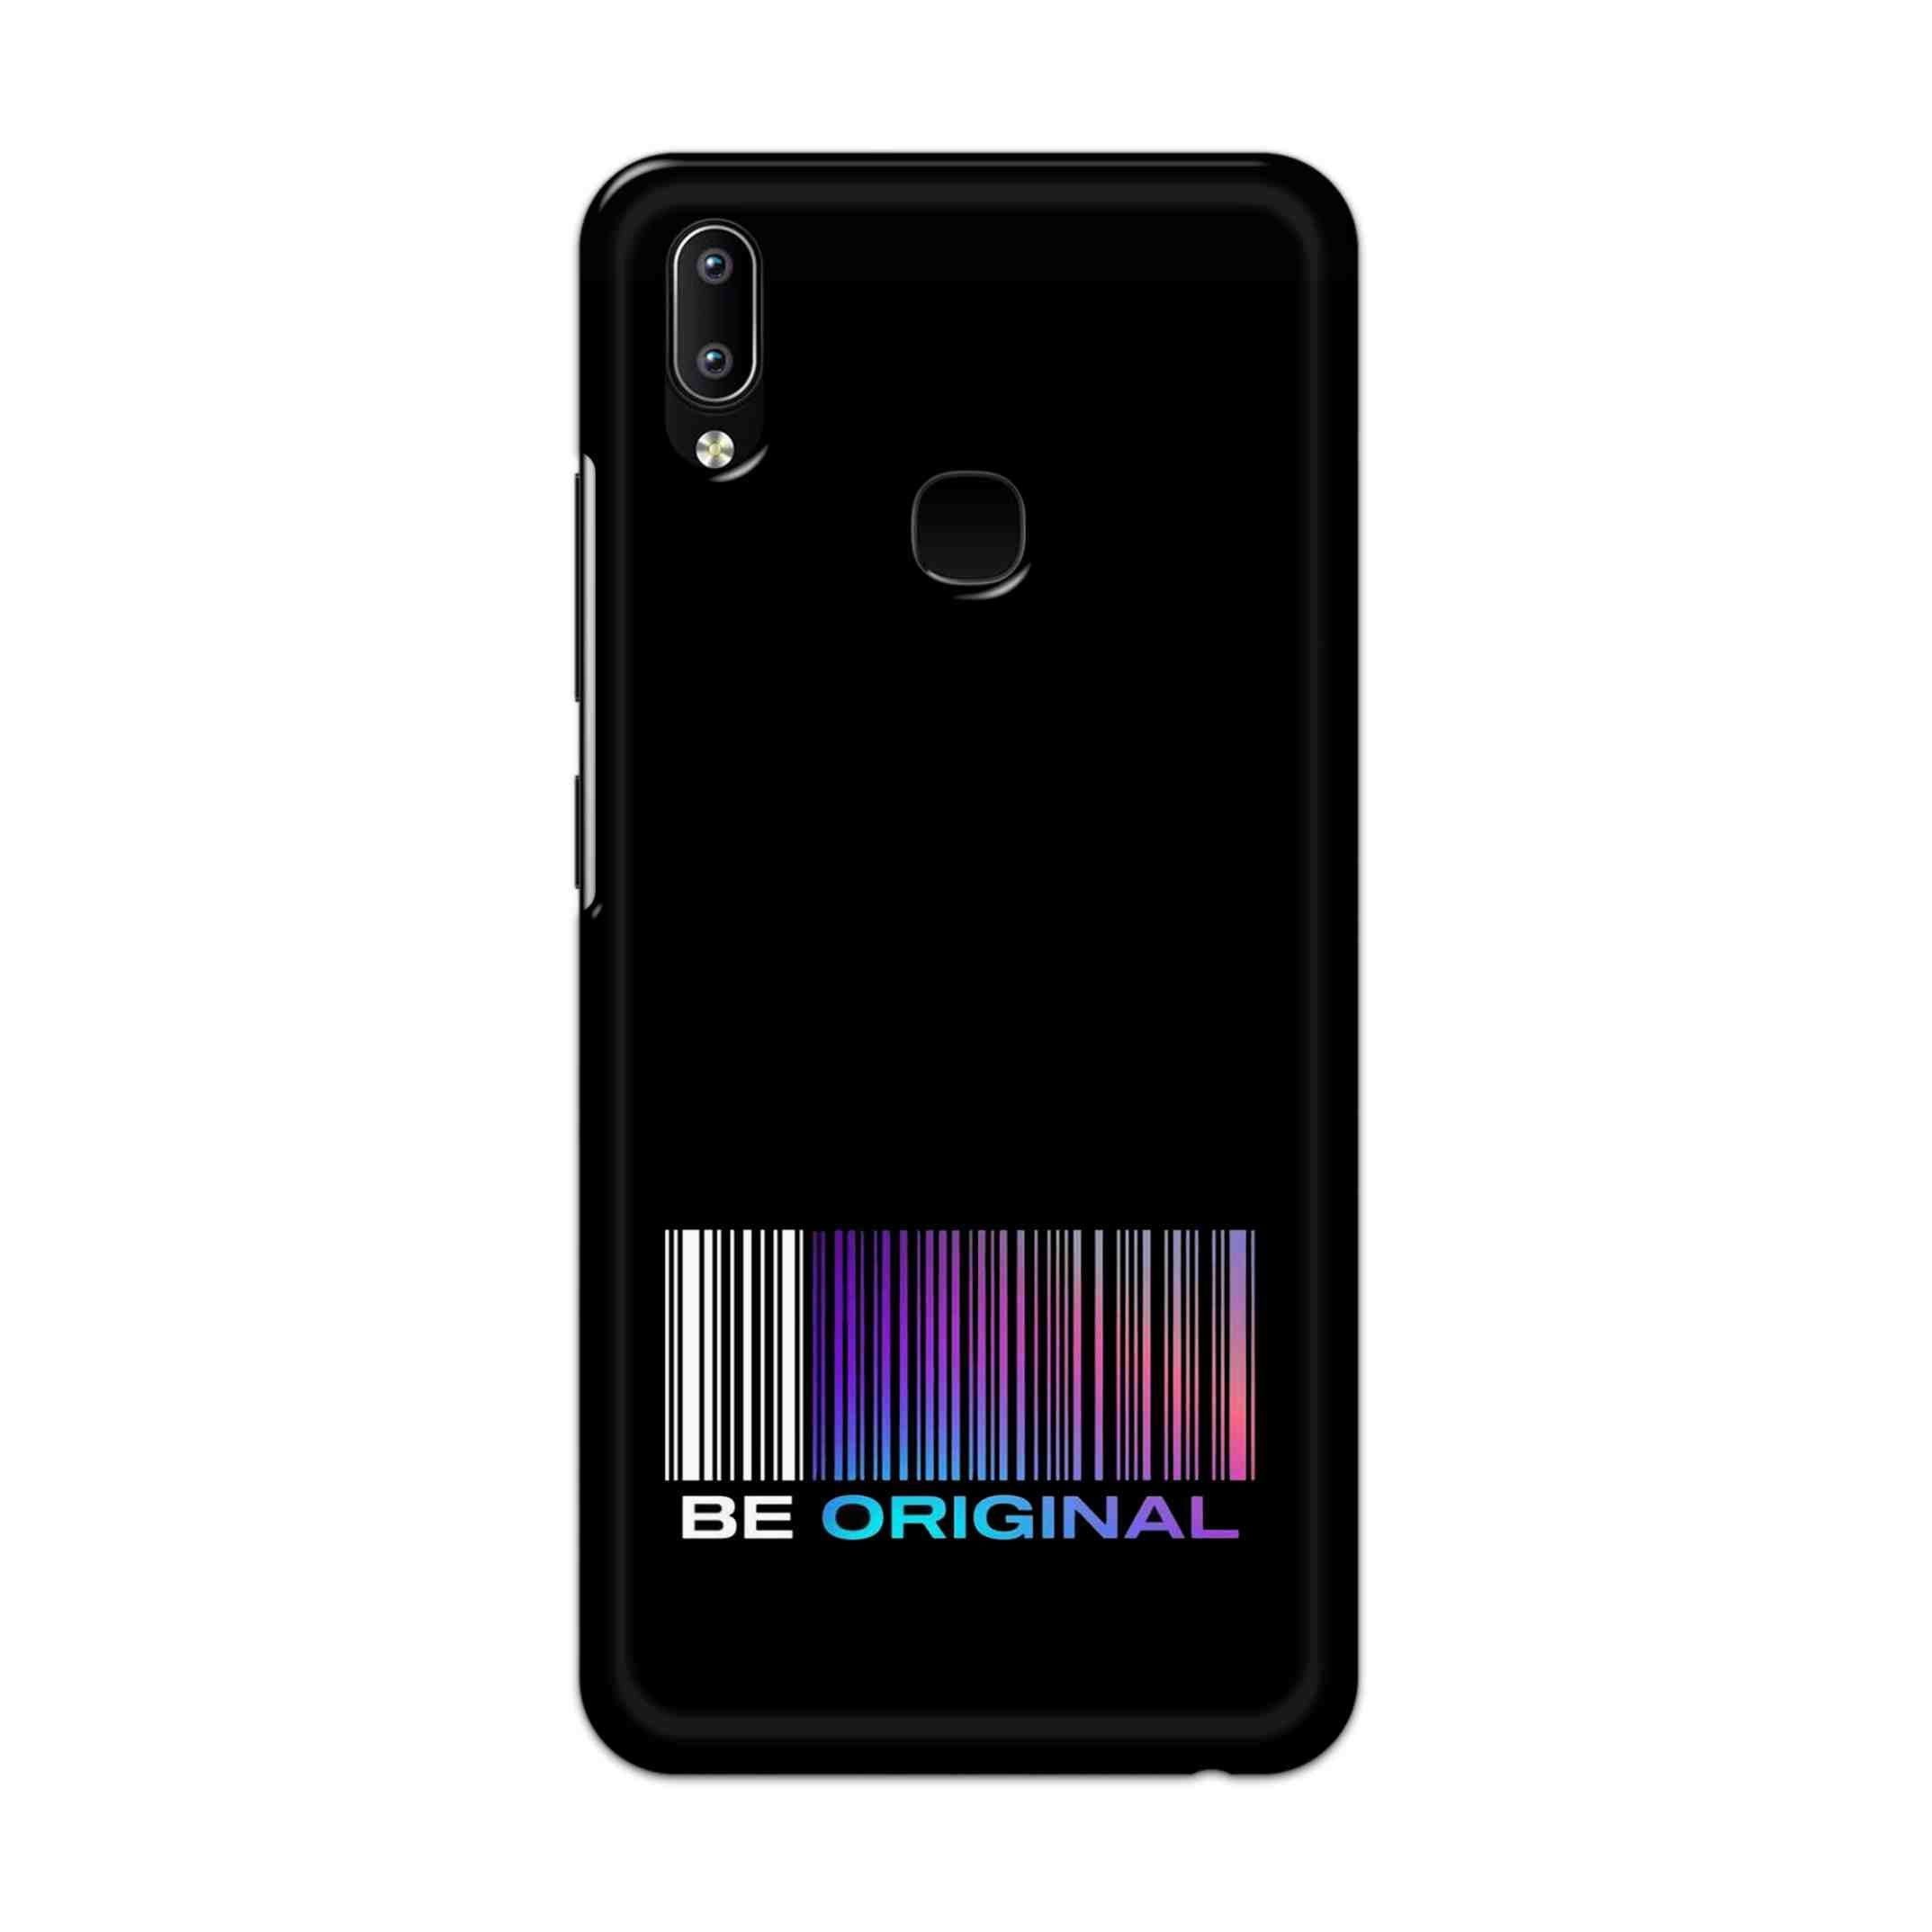 Buy Be Original Hard Back Mobile Phone Case Cover For Vivo Y95 / Y93 / Y91 Online